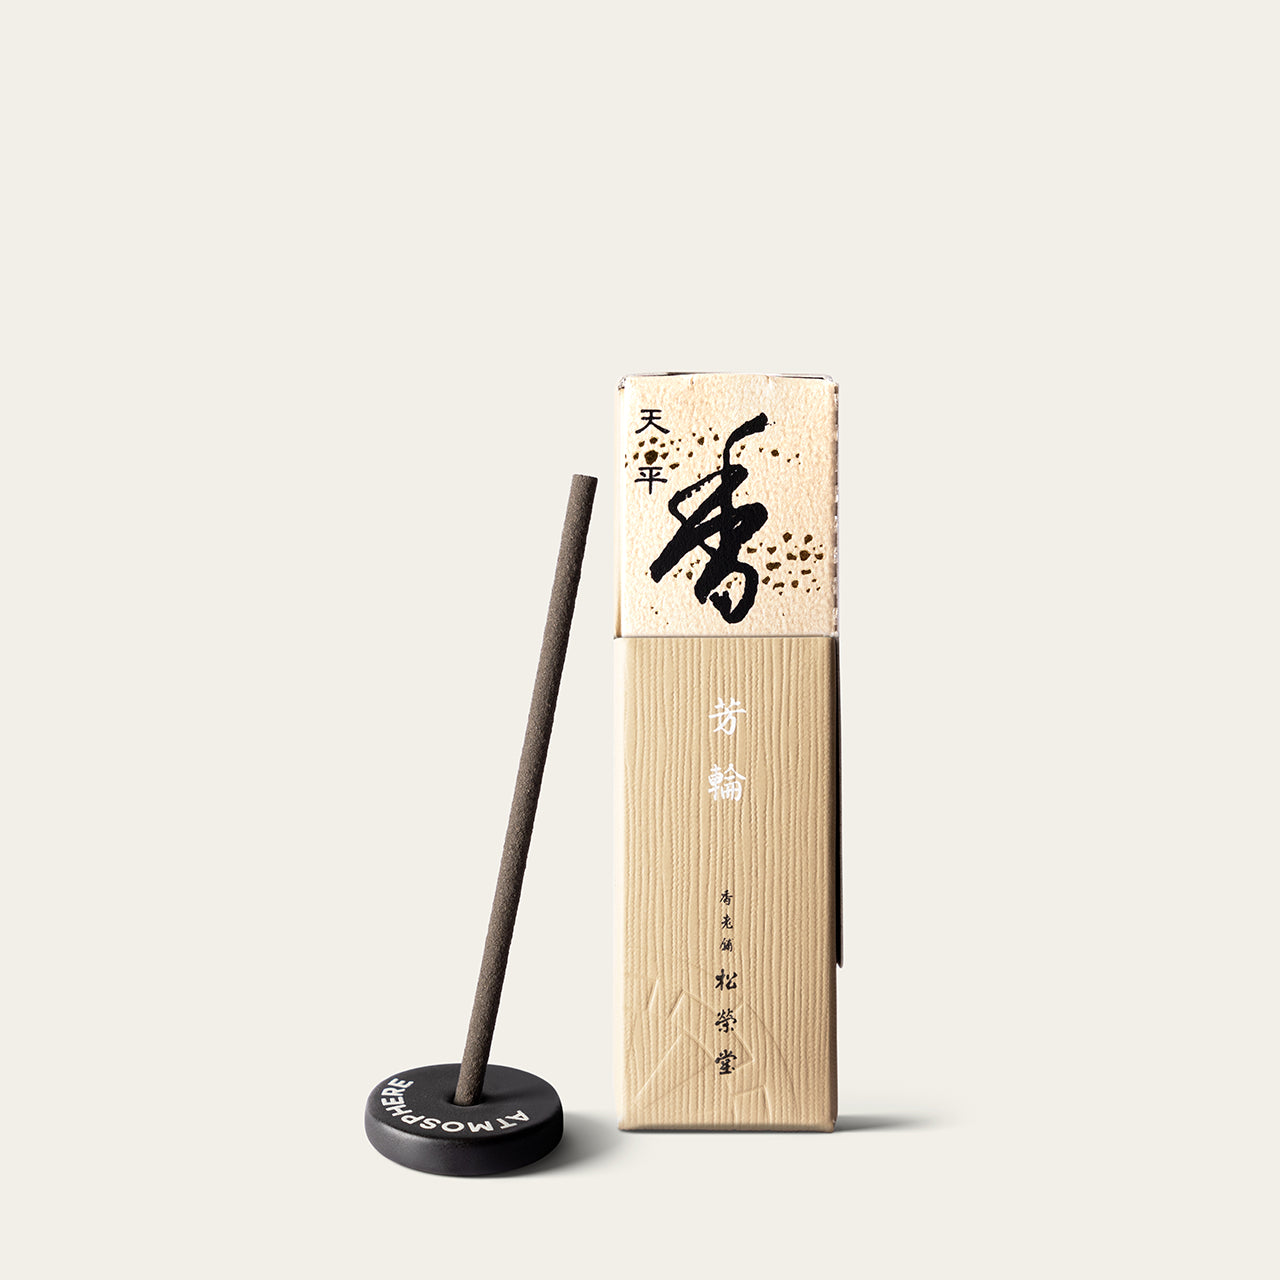 Shoyeido Horin Peaceful Sky Tenpyo Japanese incense sticks (20 sticks) with Atmosphere ceramic incense holder